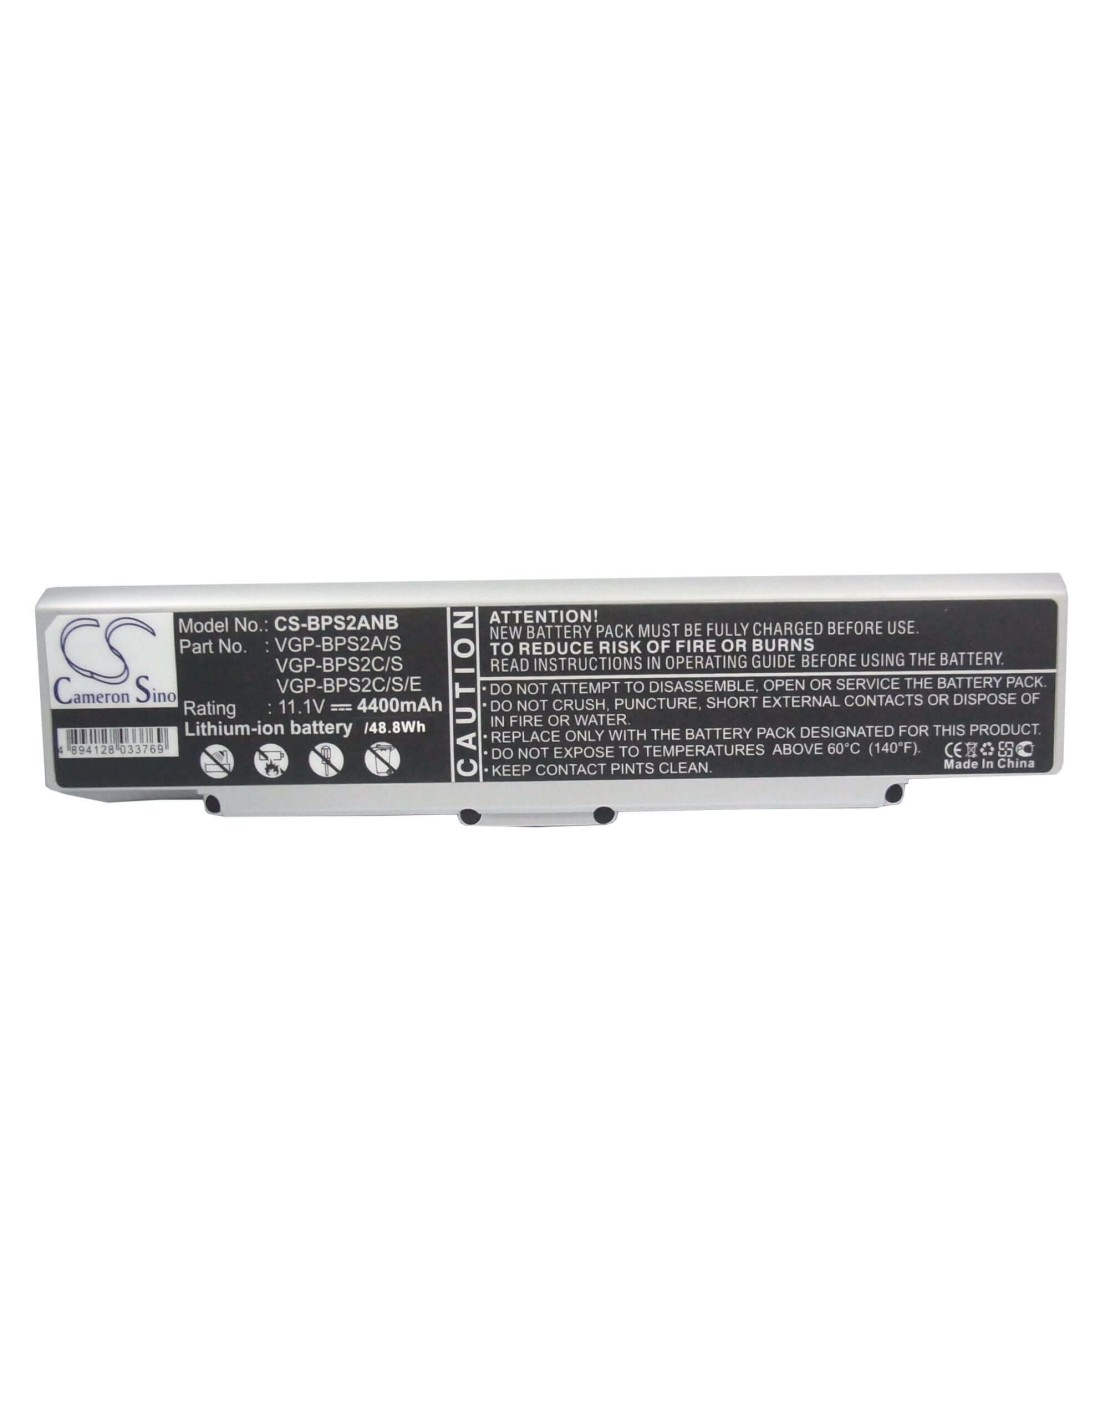 Silver Battery for Sony Vaio Vgc-la38g, Vaio Vgn-c140g/b, Vaio Vgn-c150p/b 11.1V, 4400mAh - 48.84Wh